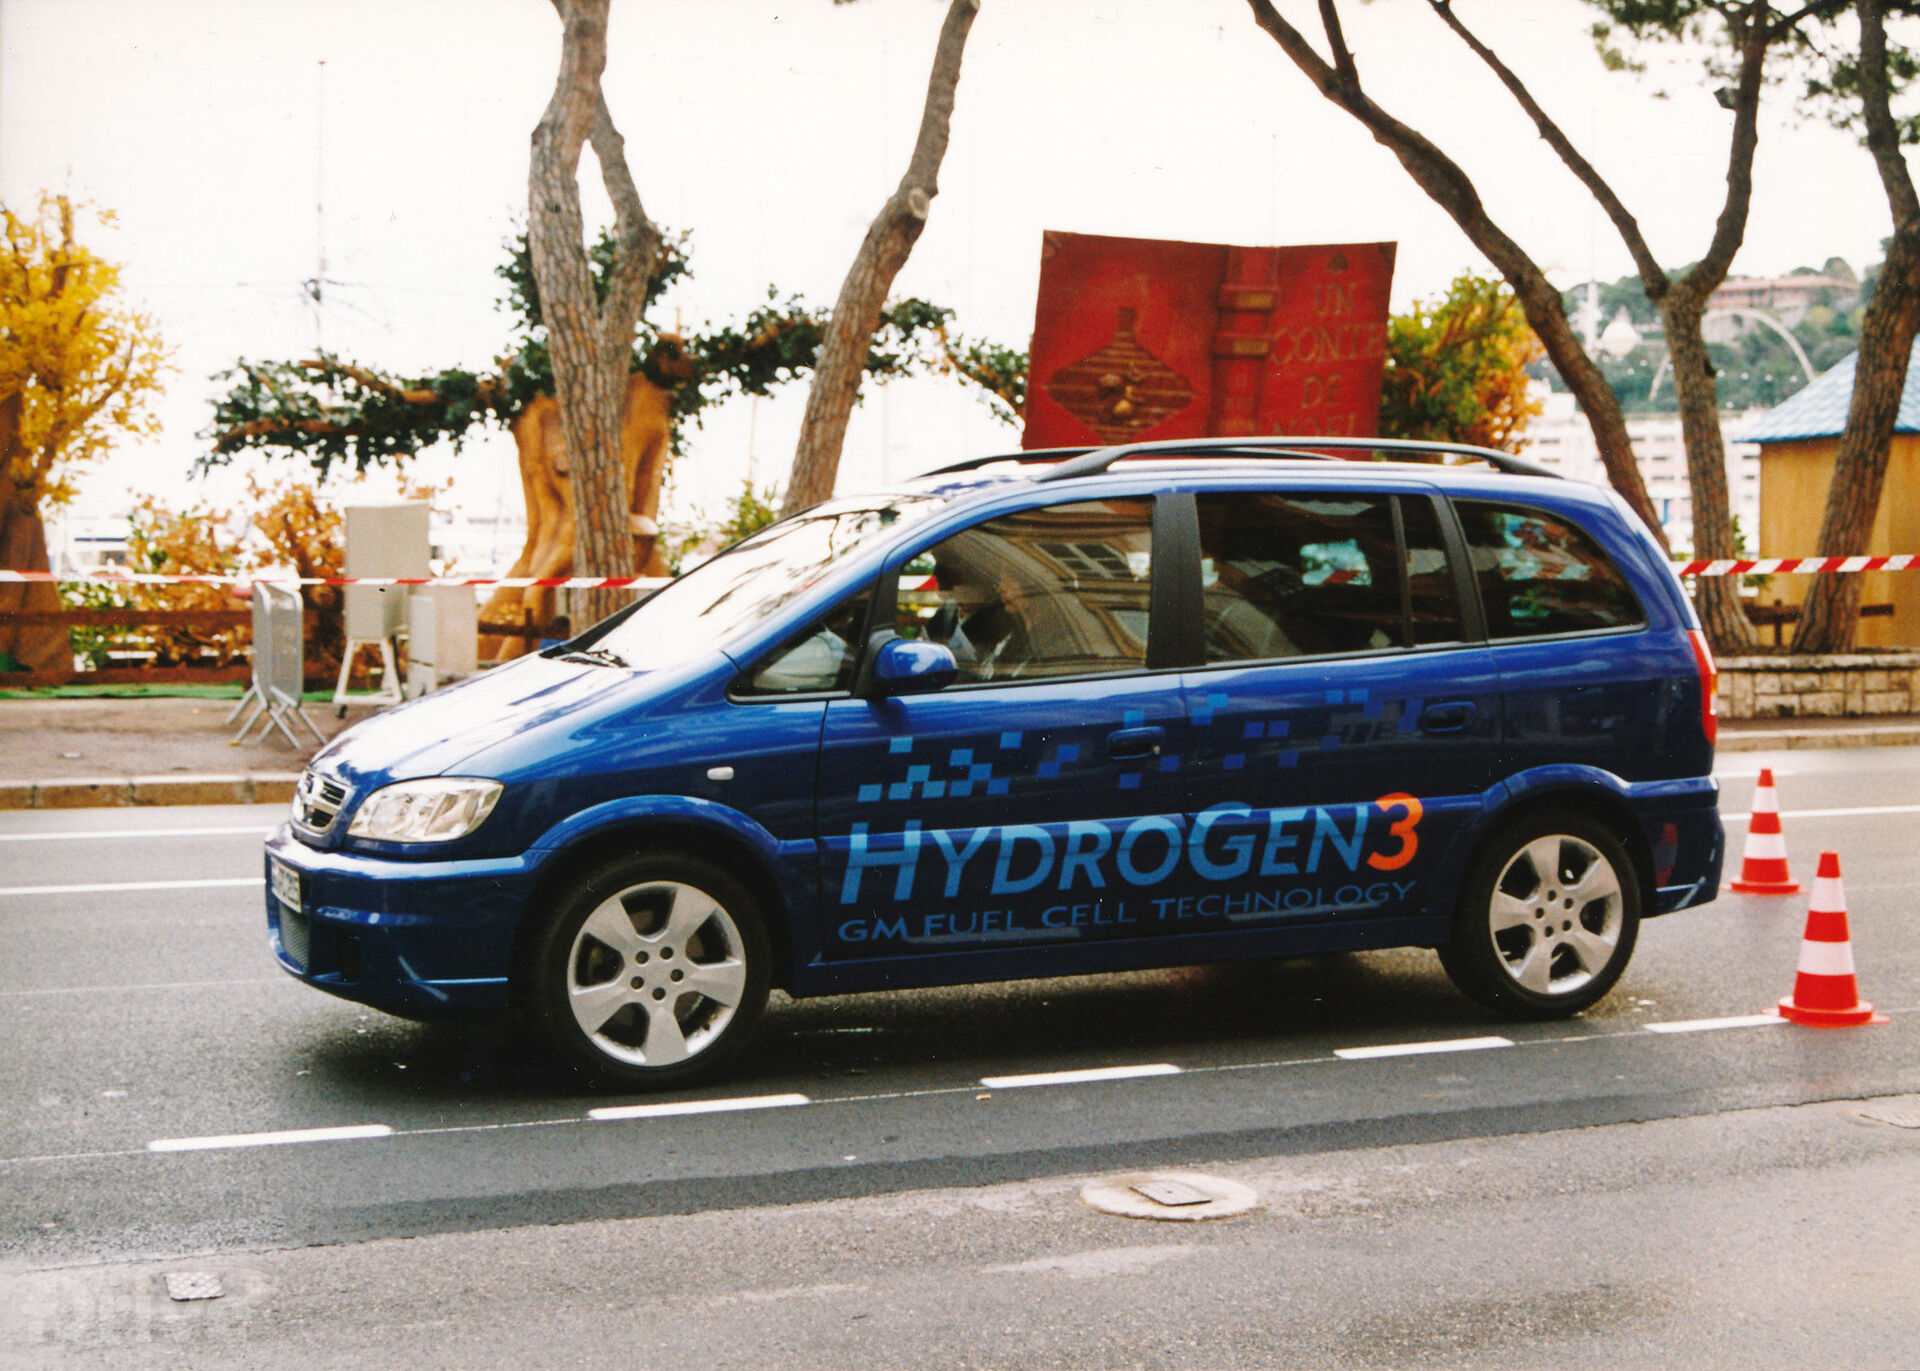 Opel Zafira HydroGen3